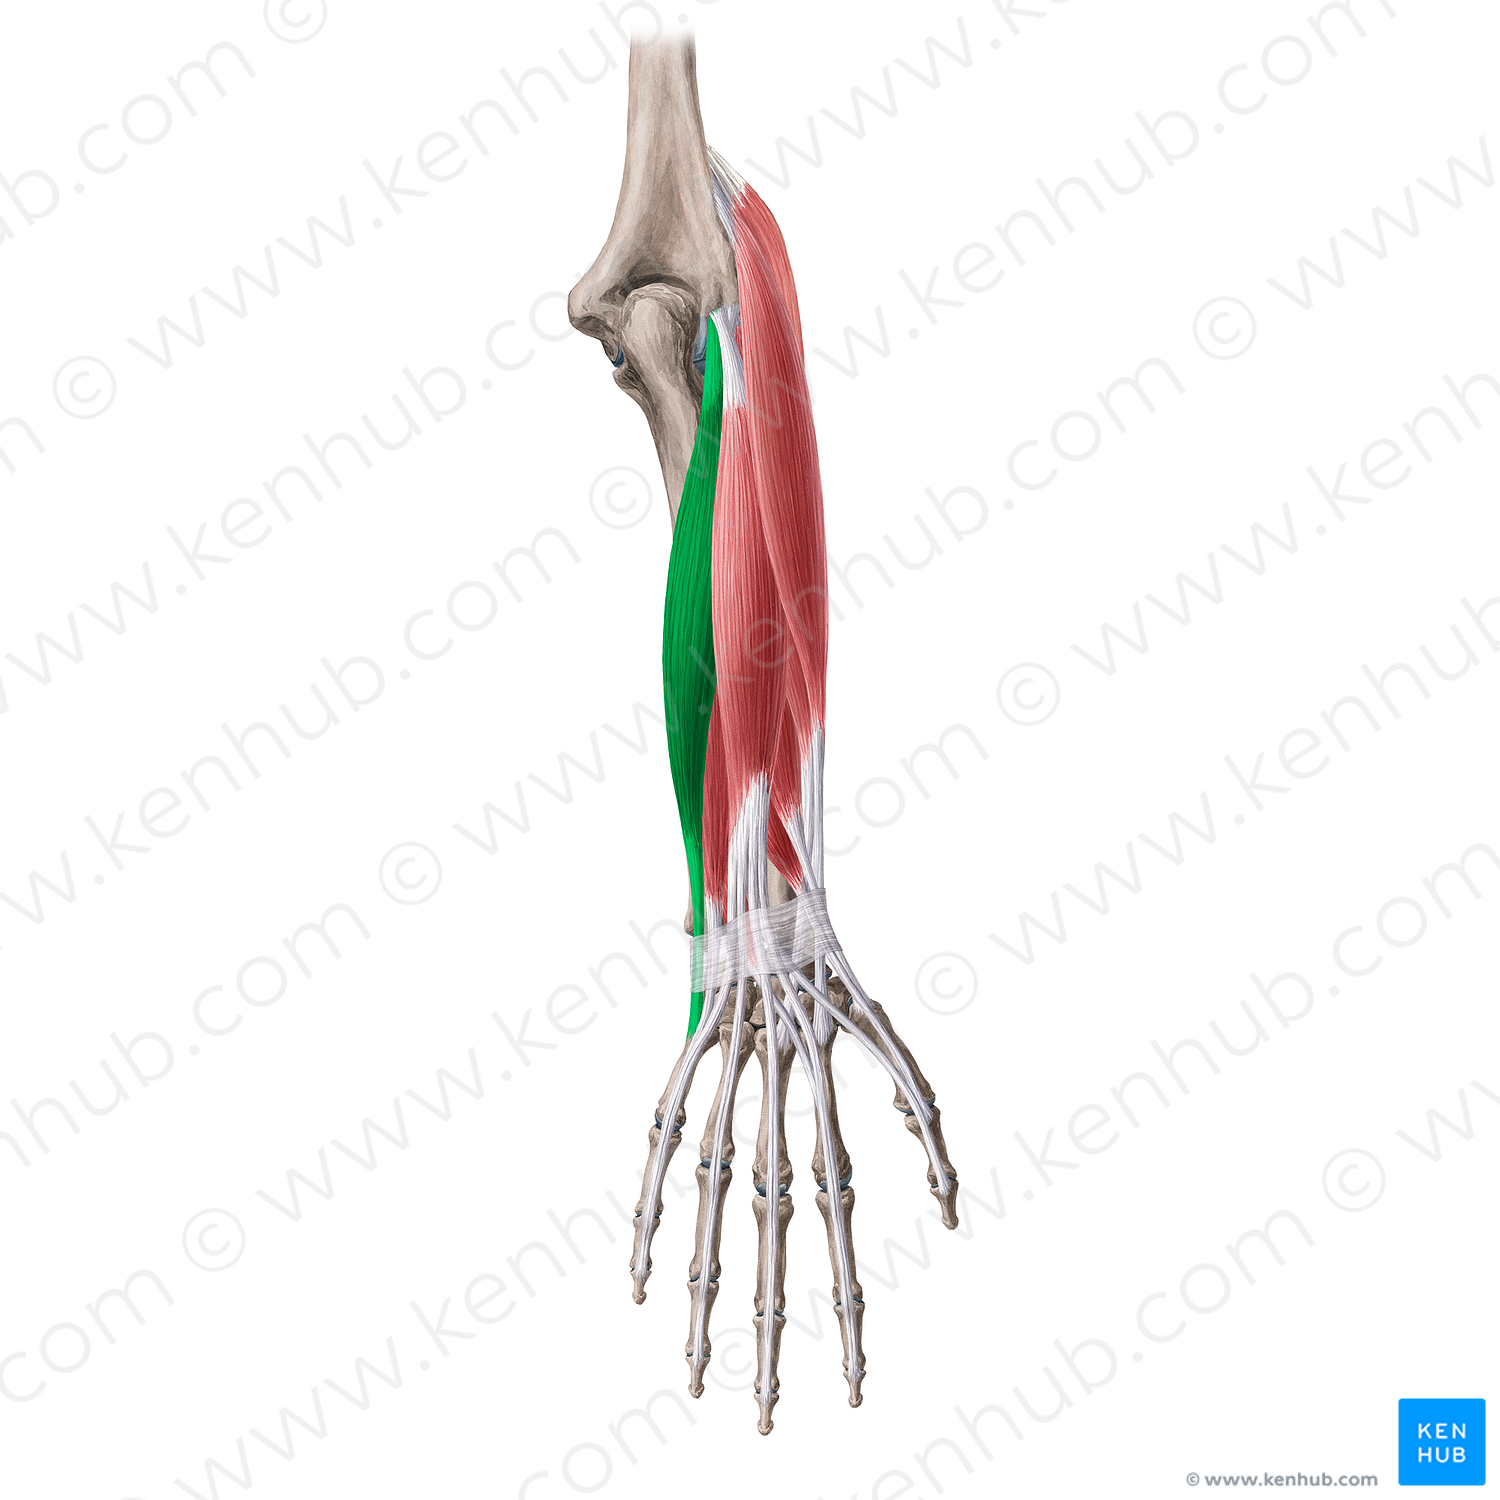 Extensor carpi ulnaris muscle (#18660)